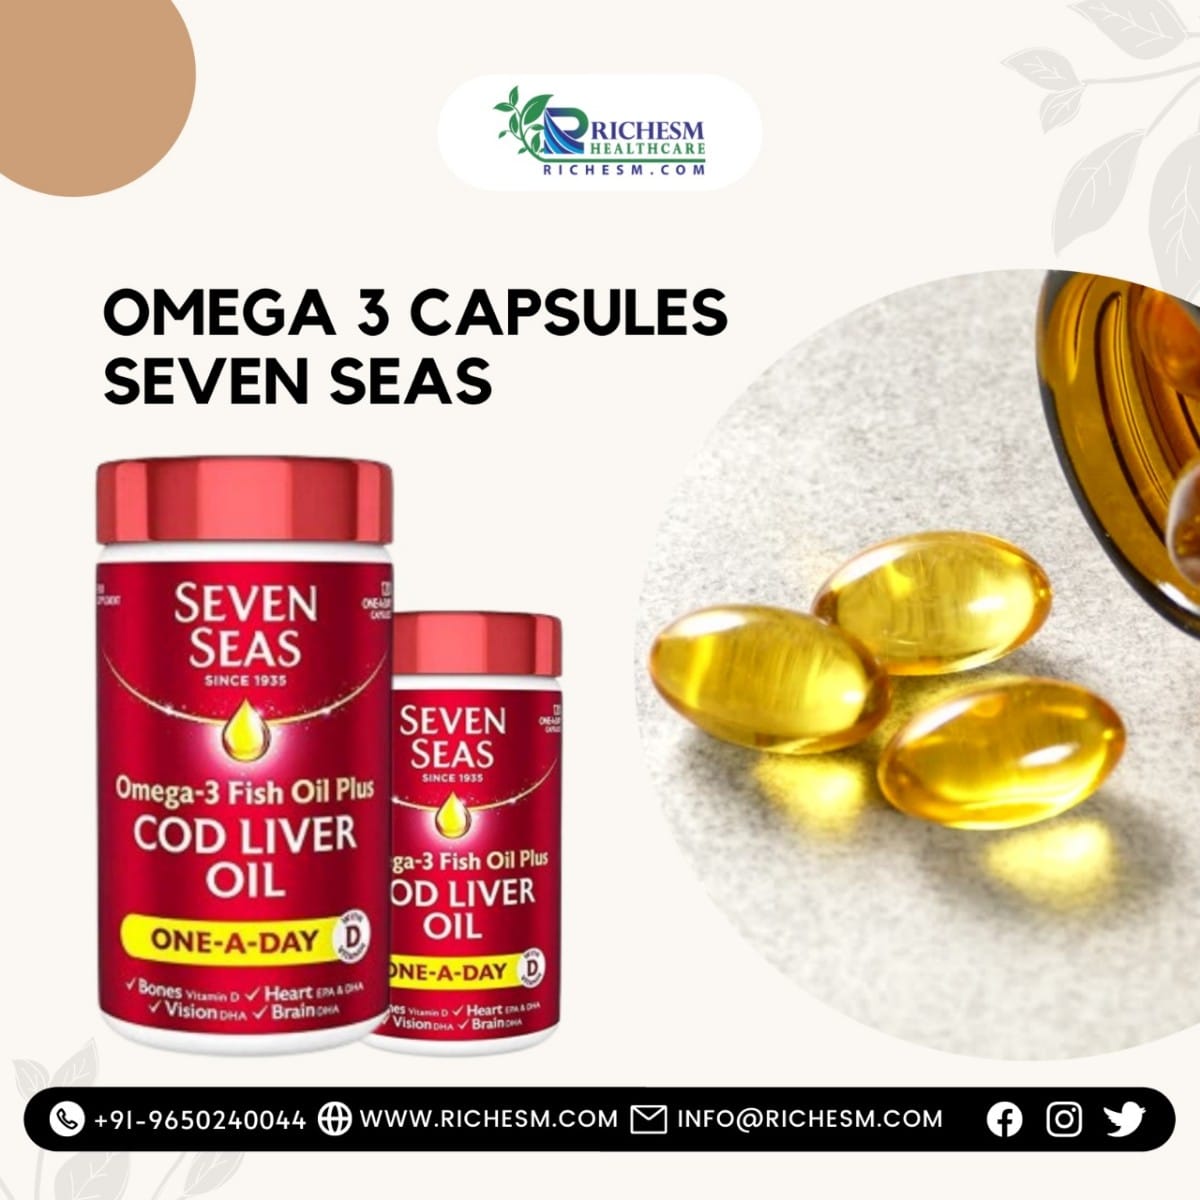 Buy Omega 3 Capsules Seven Seas Online Health and Nutrition Sevenseas omega